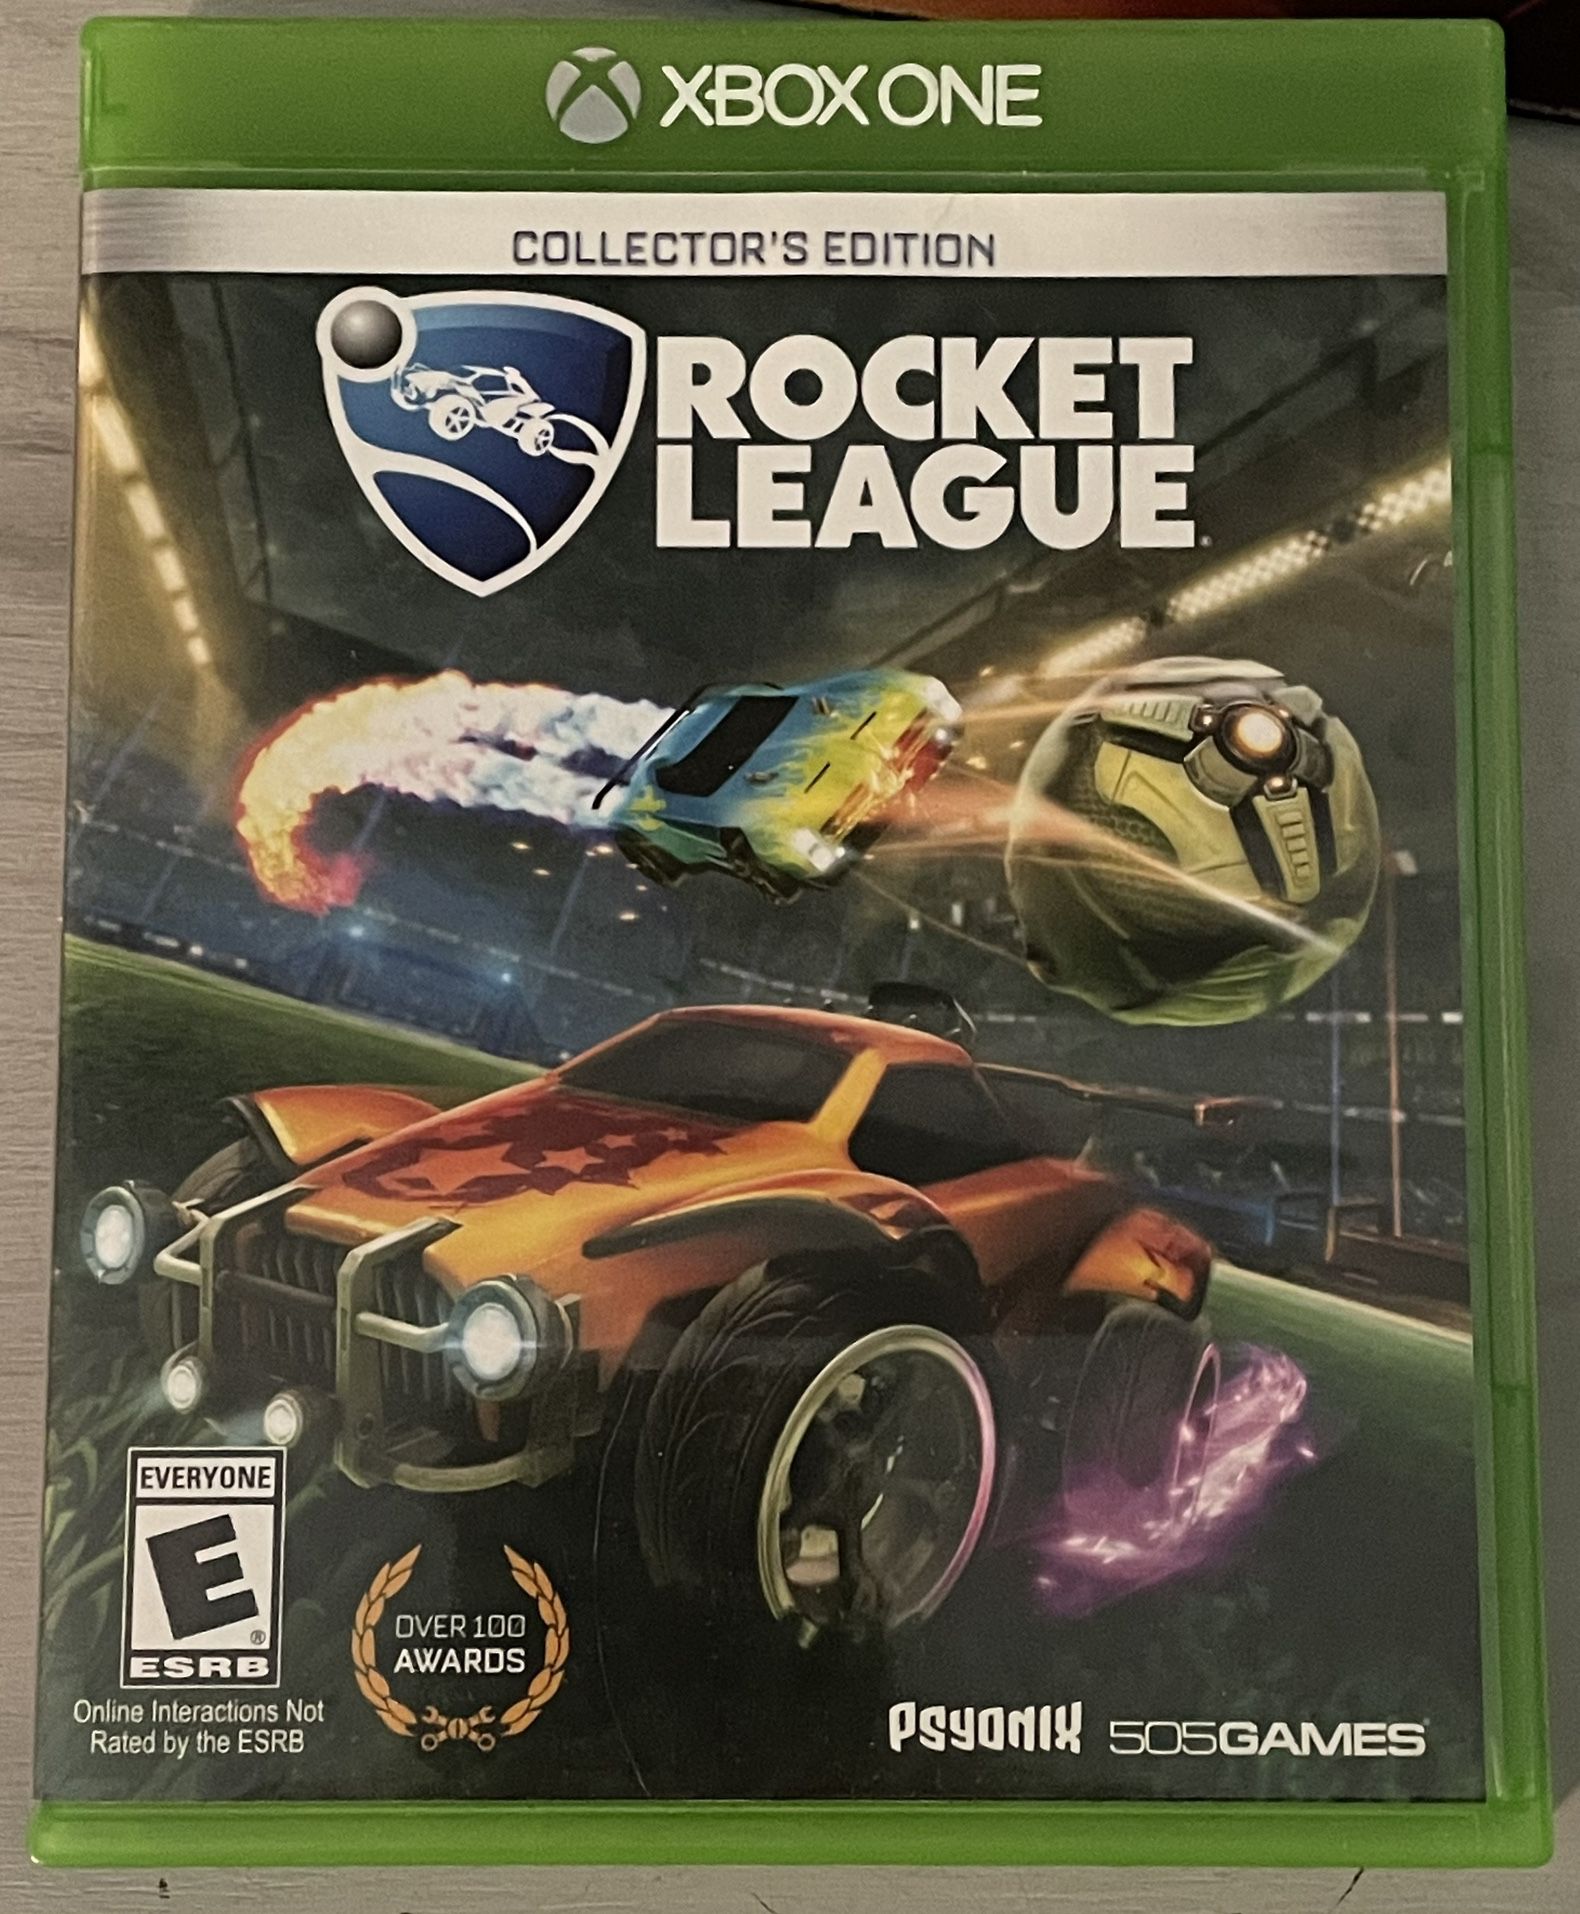 Destiny 2 & Rocket League For XBox One X